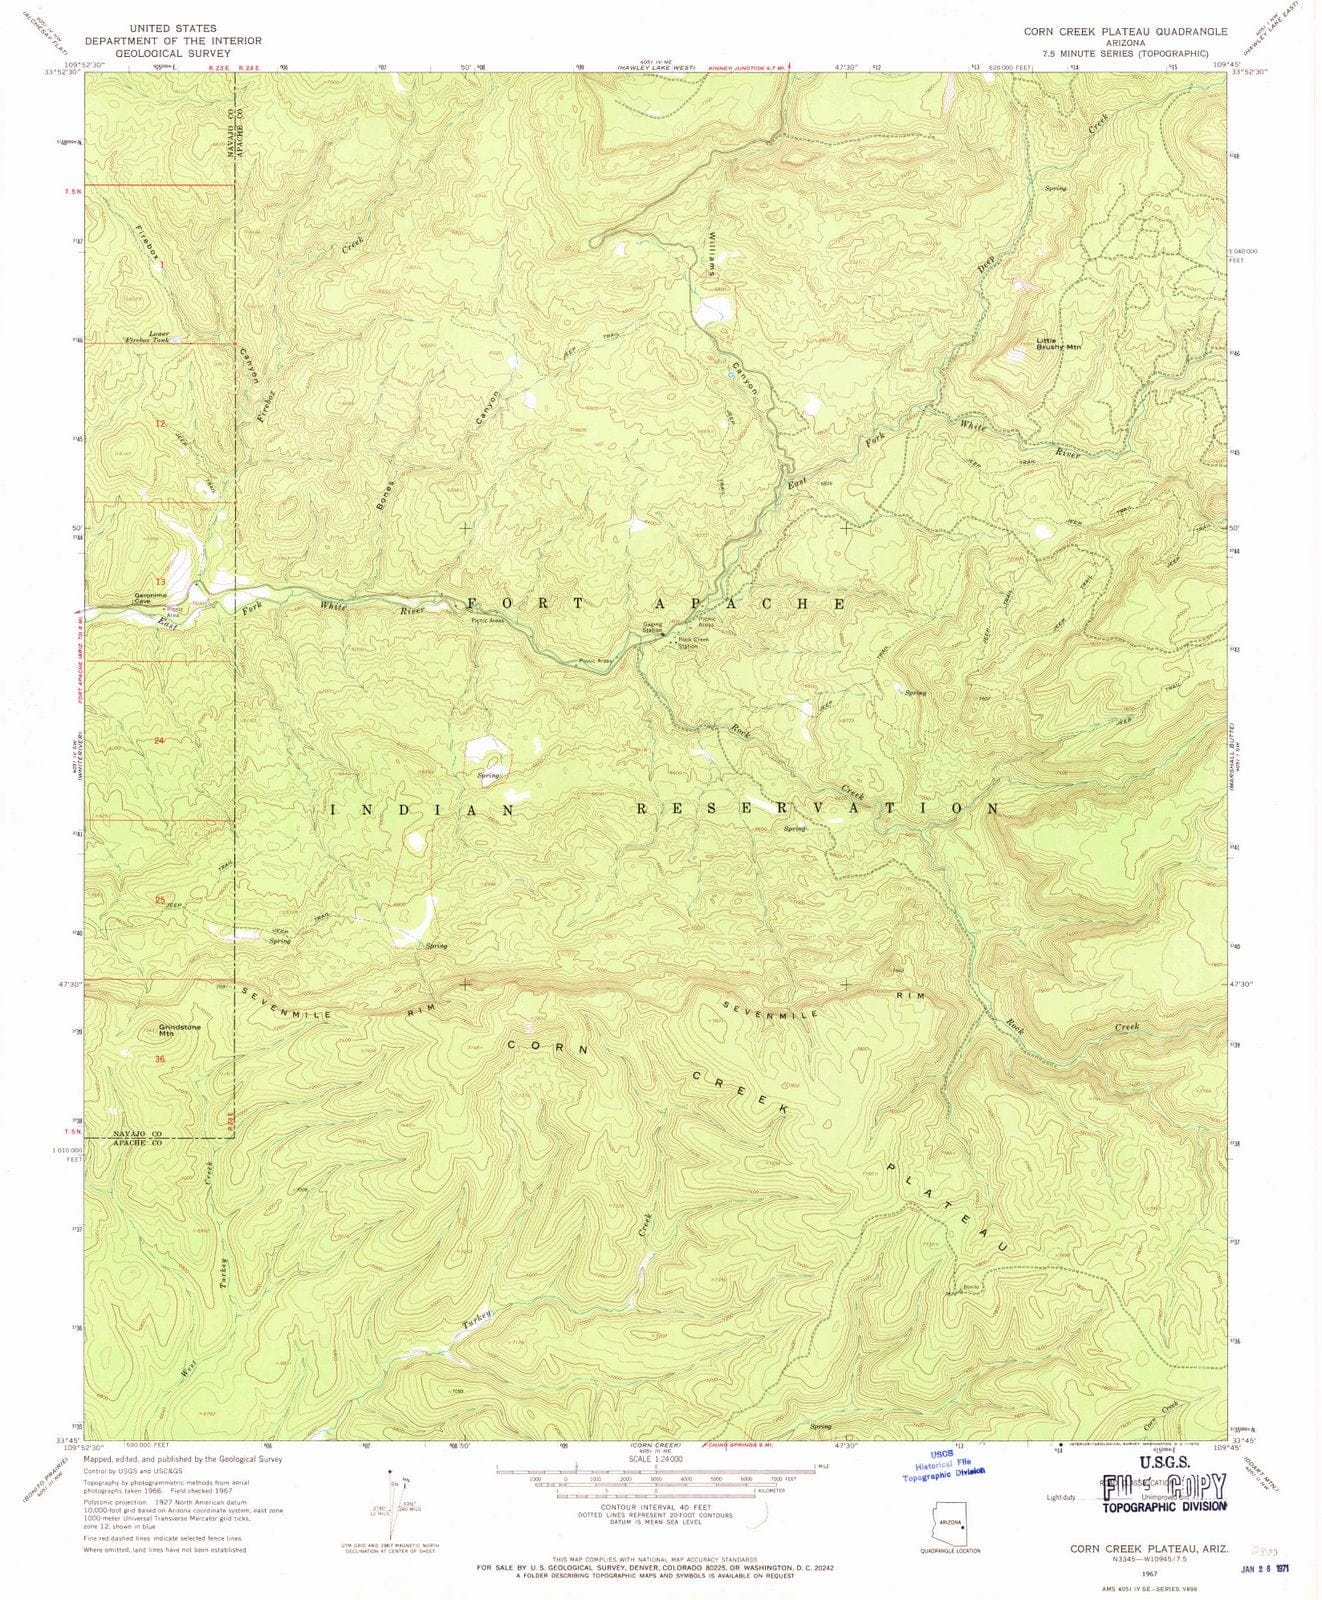 1967 Corn Creek Plateau, AZ - Arizona - USGS Topographic Map